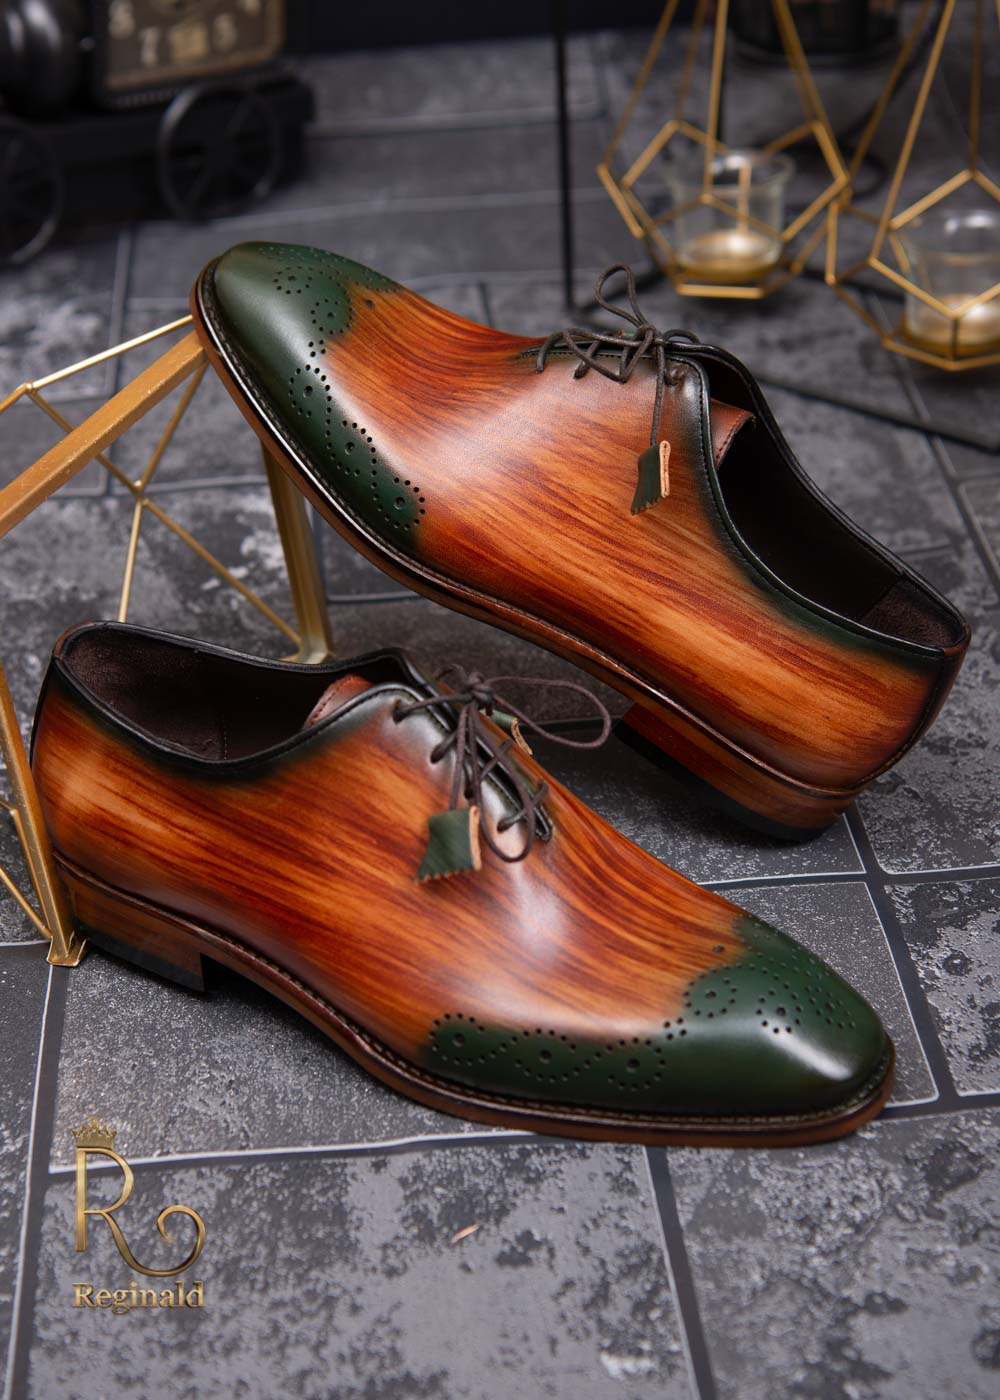 Pantofi eleganti barbatesti din piele naturala, maro - varf verde - P1310